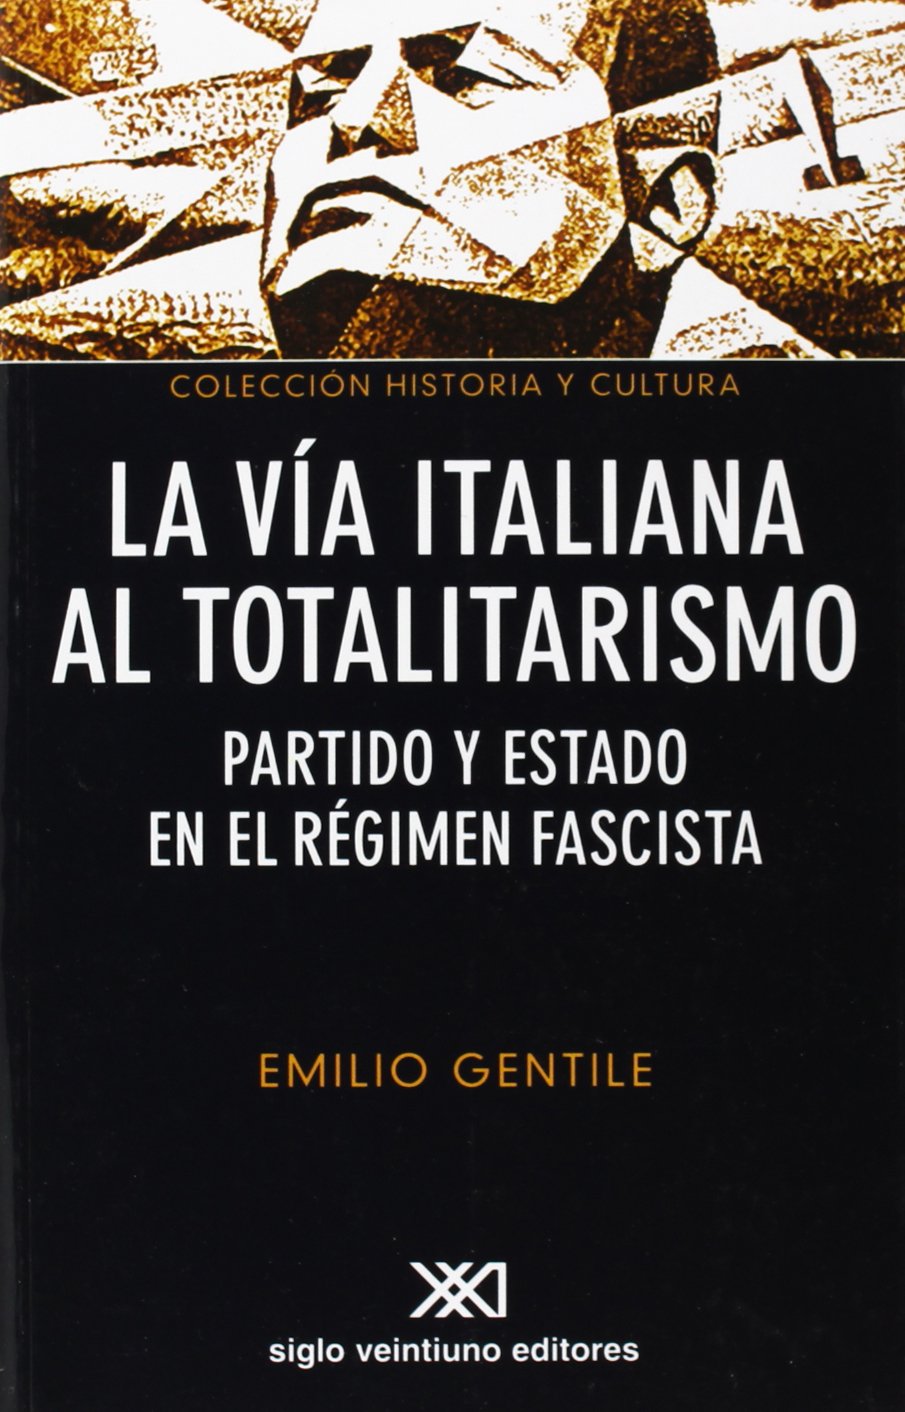 La vía italiana al totalitarismo